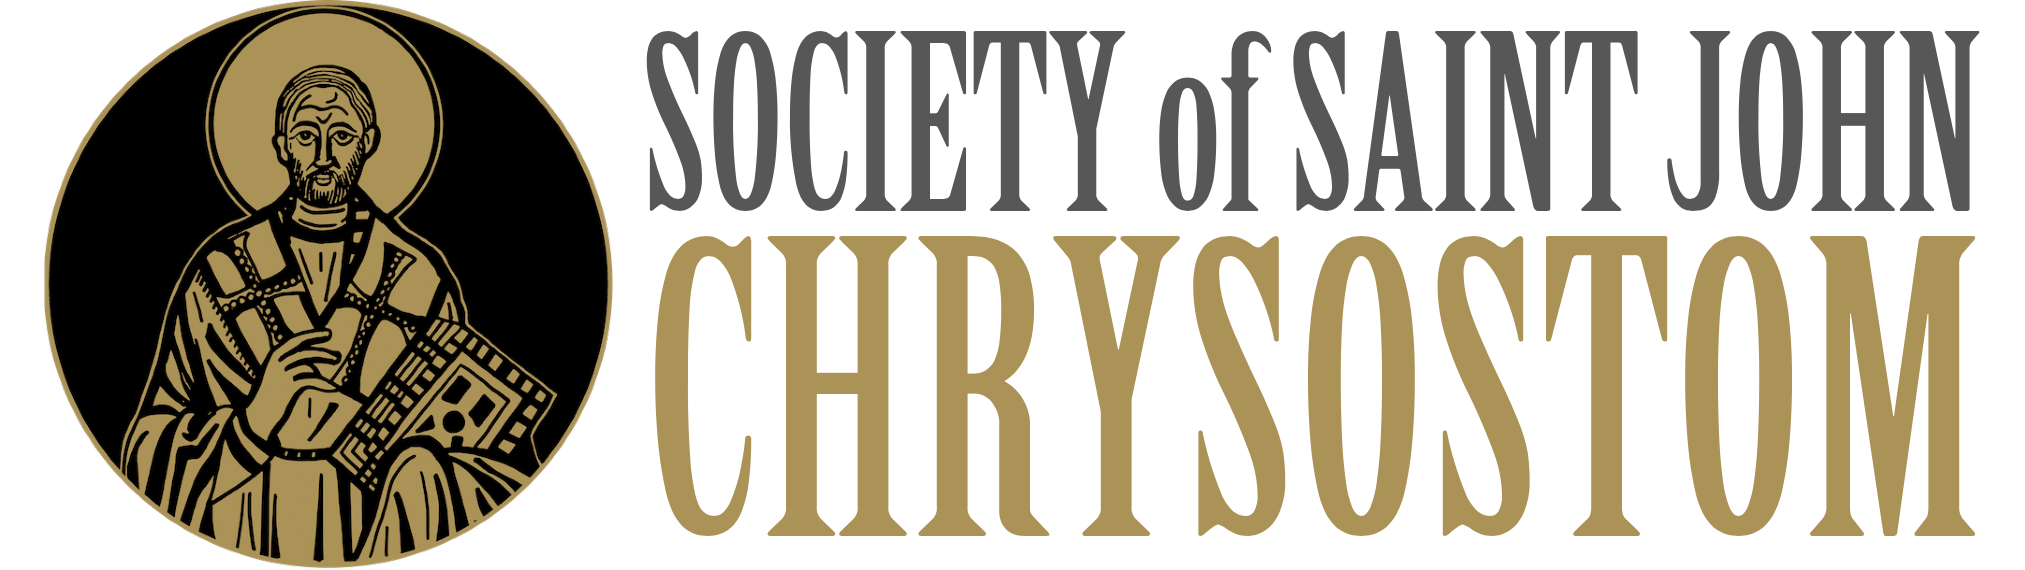 Society of Saint John Chrysostom